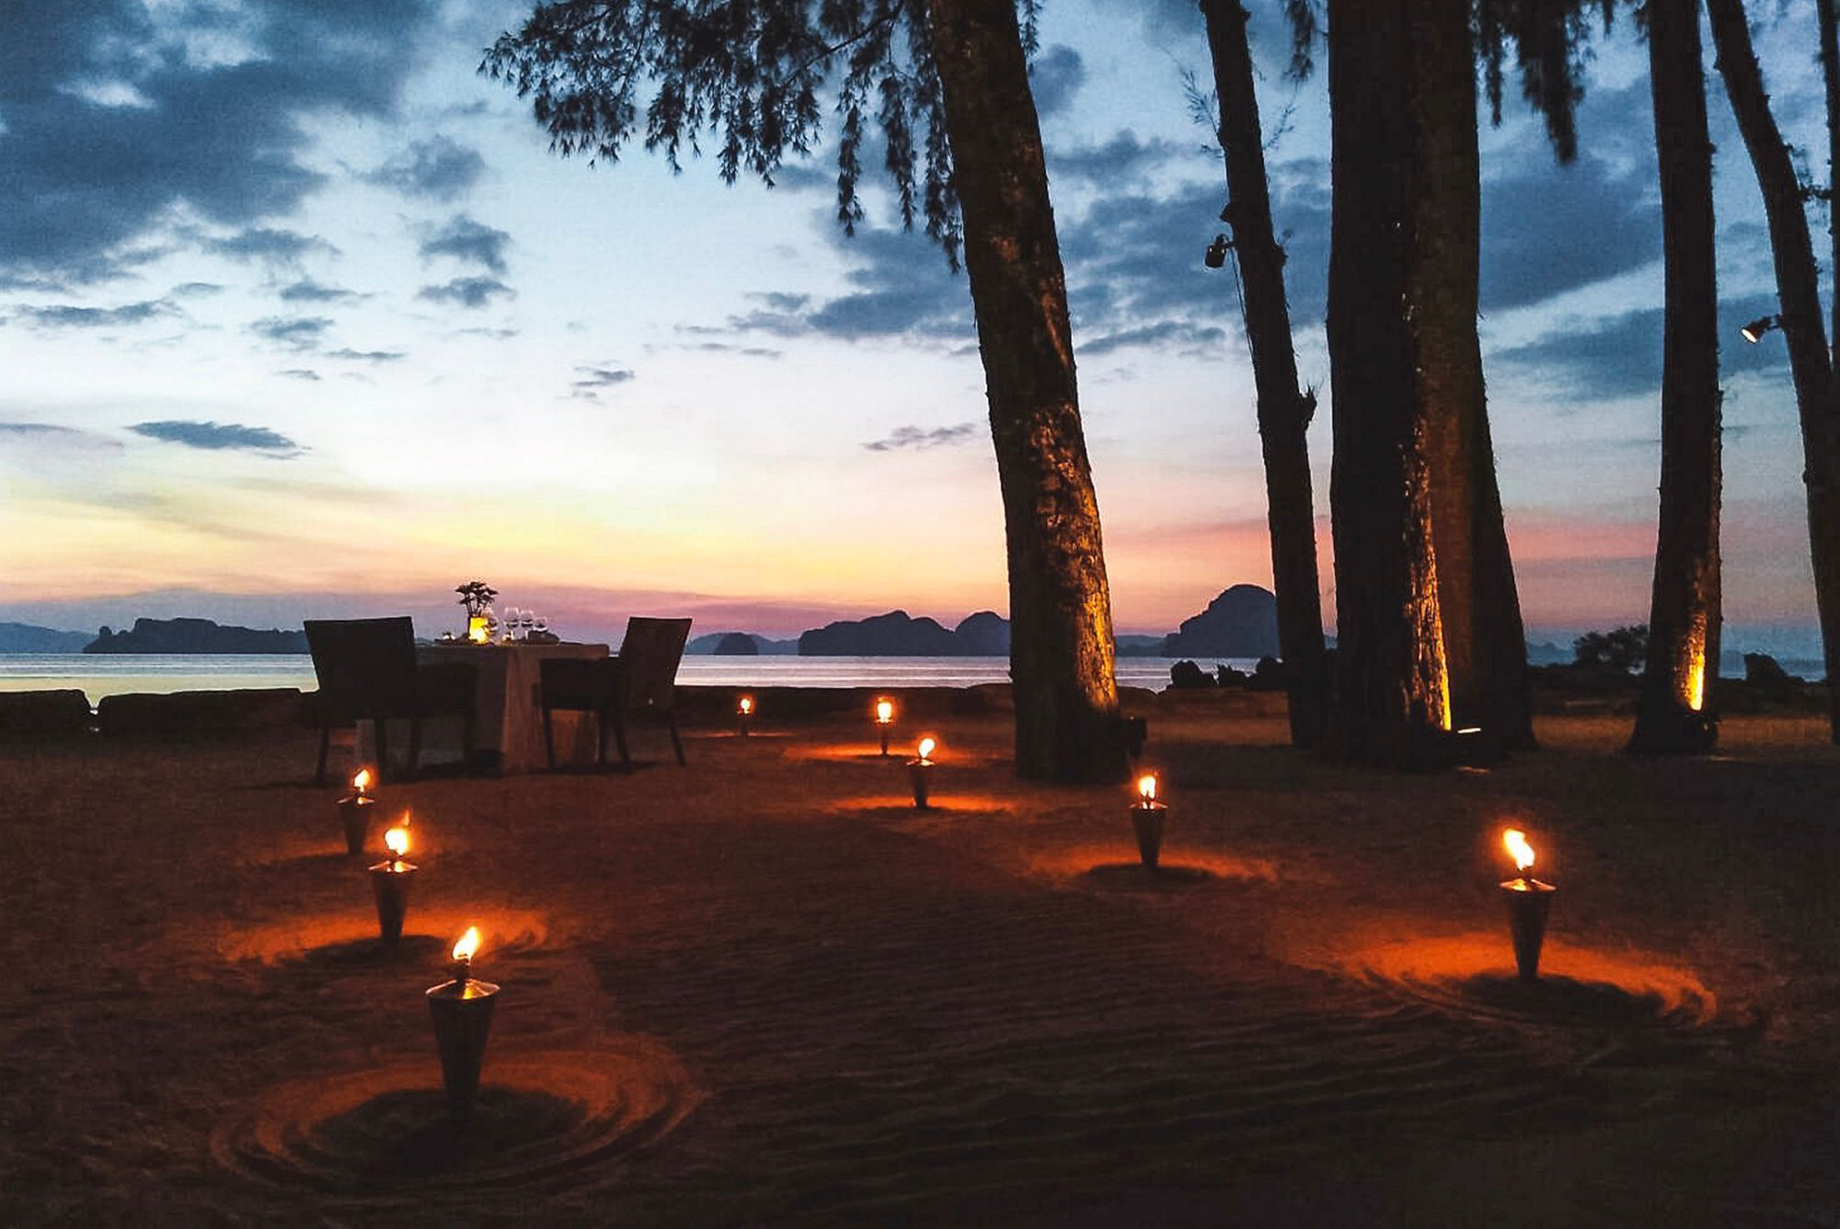 The Ritz-Carlton, Phulay Bay Reserve Resort - Muang Krabi, Thailand - Beachfront Dining Sunset